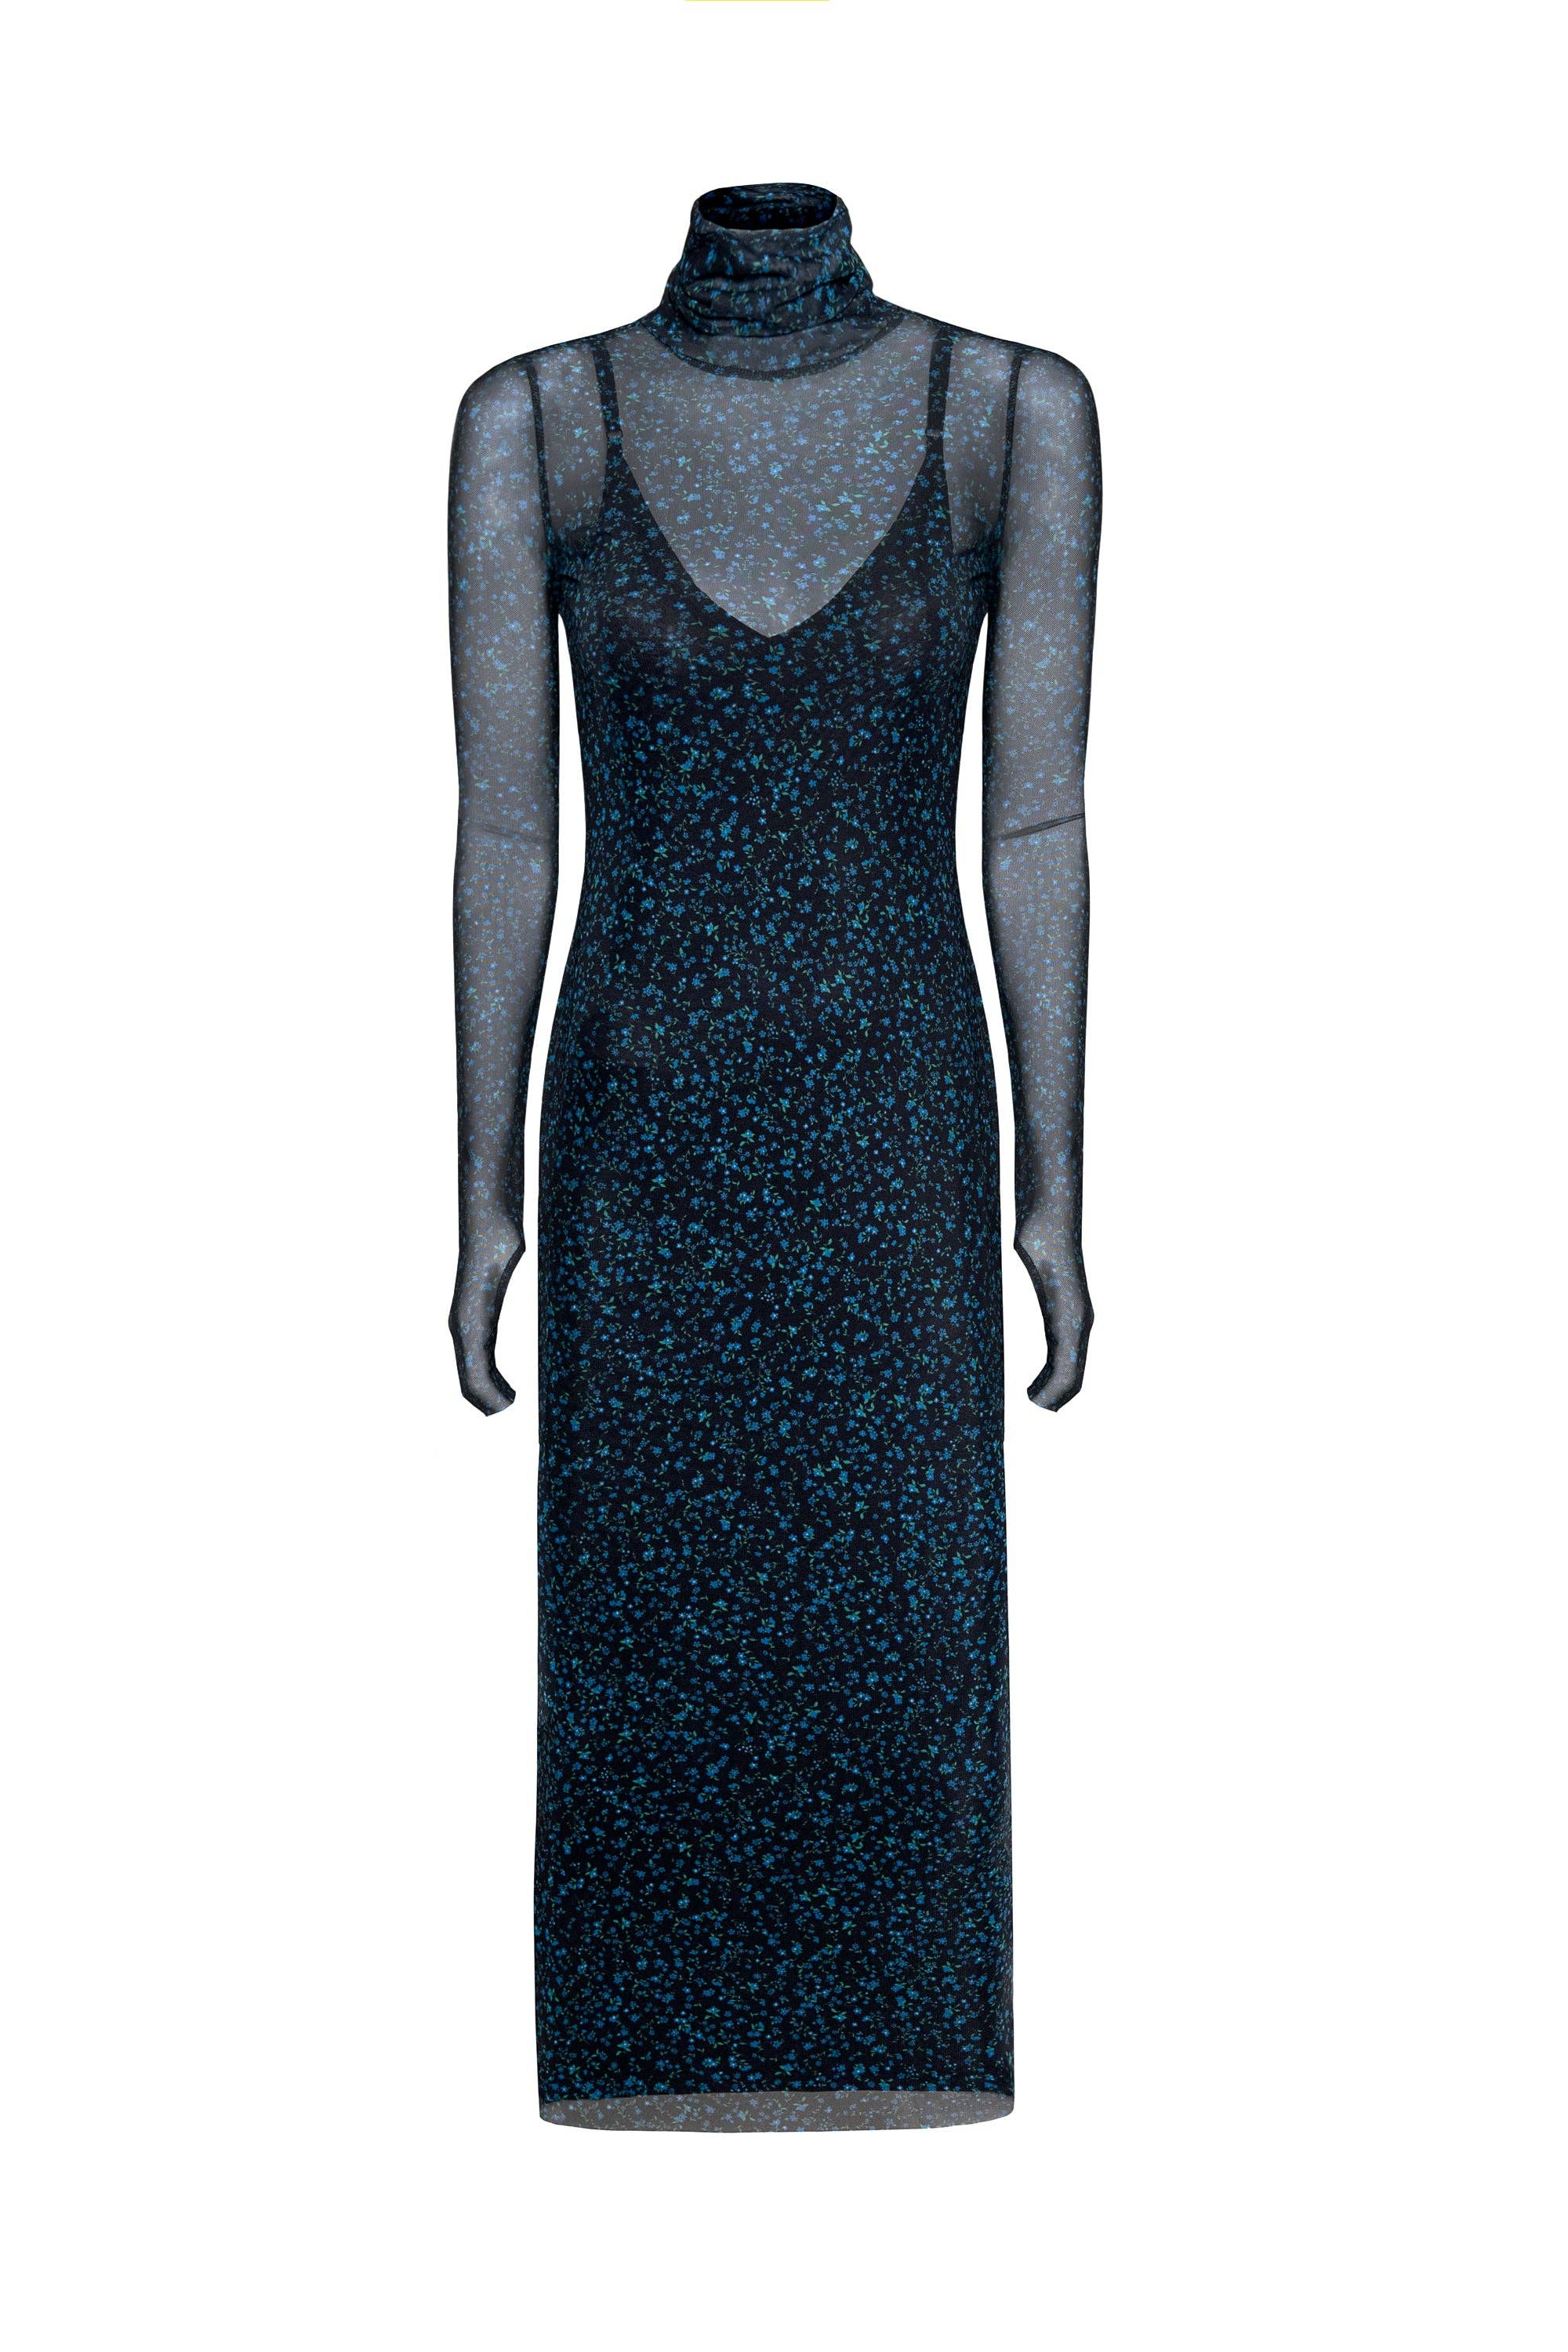 AFRM - Shailene Mesh Dress - Blue Daisy Ditsy